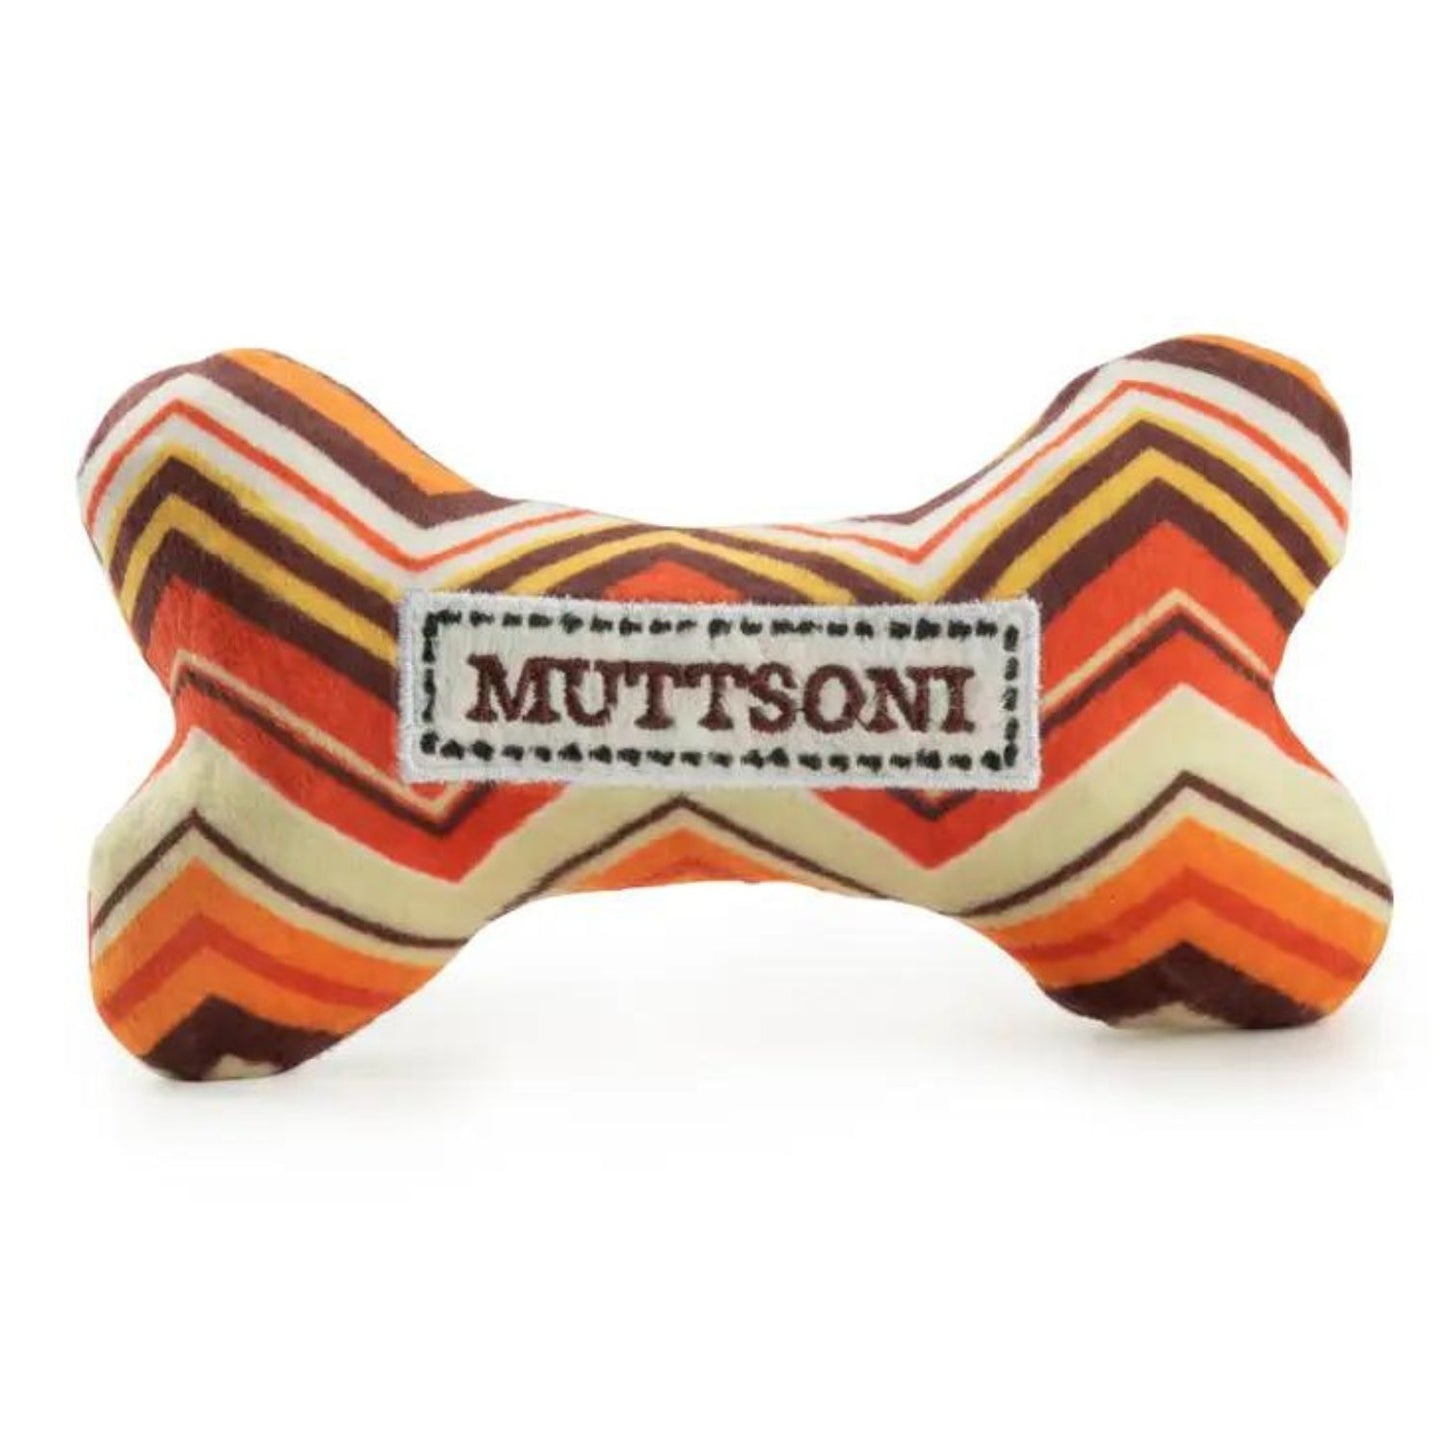 Plush Dog Toy | Muttsoni Bone